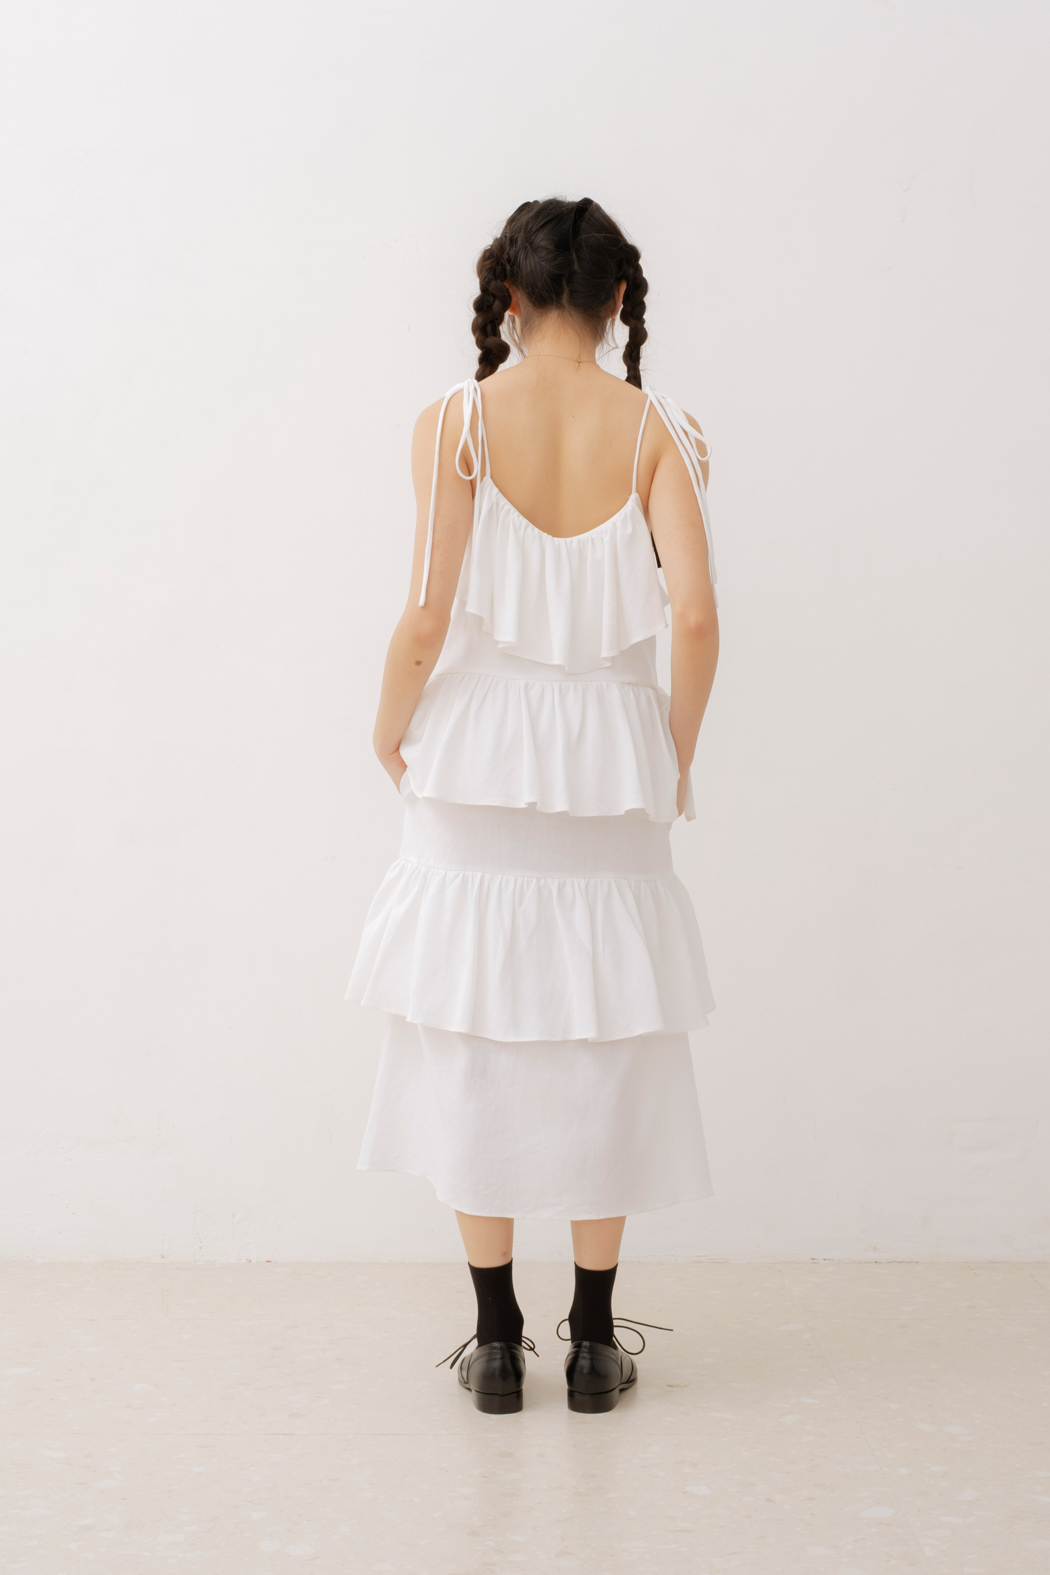 Laya Dress in White (50% OFF)